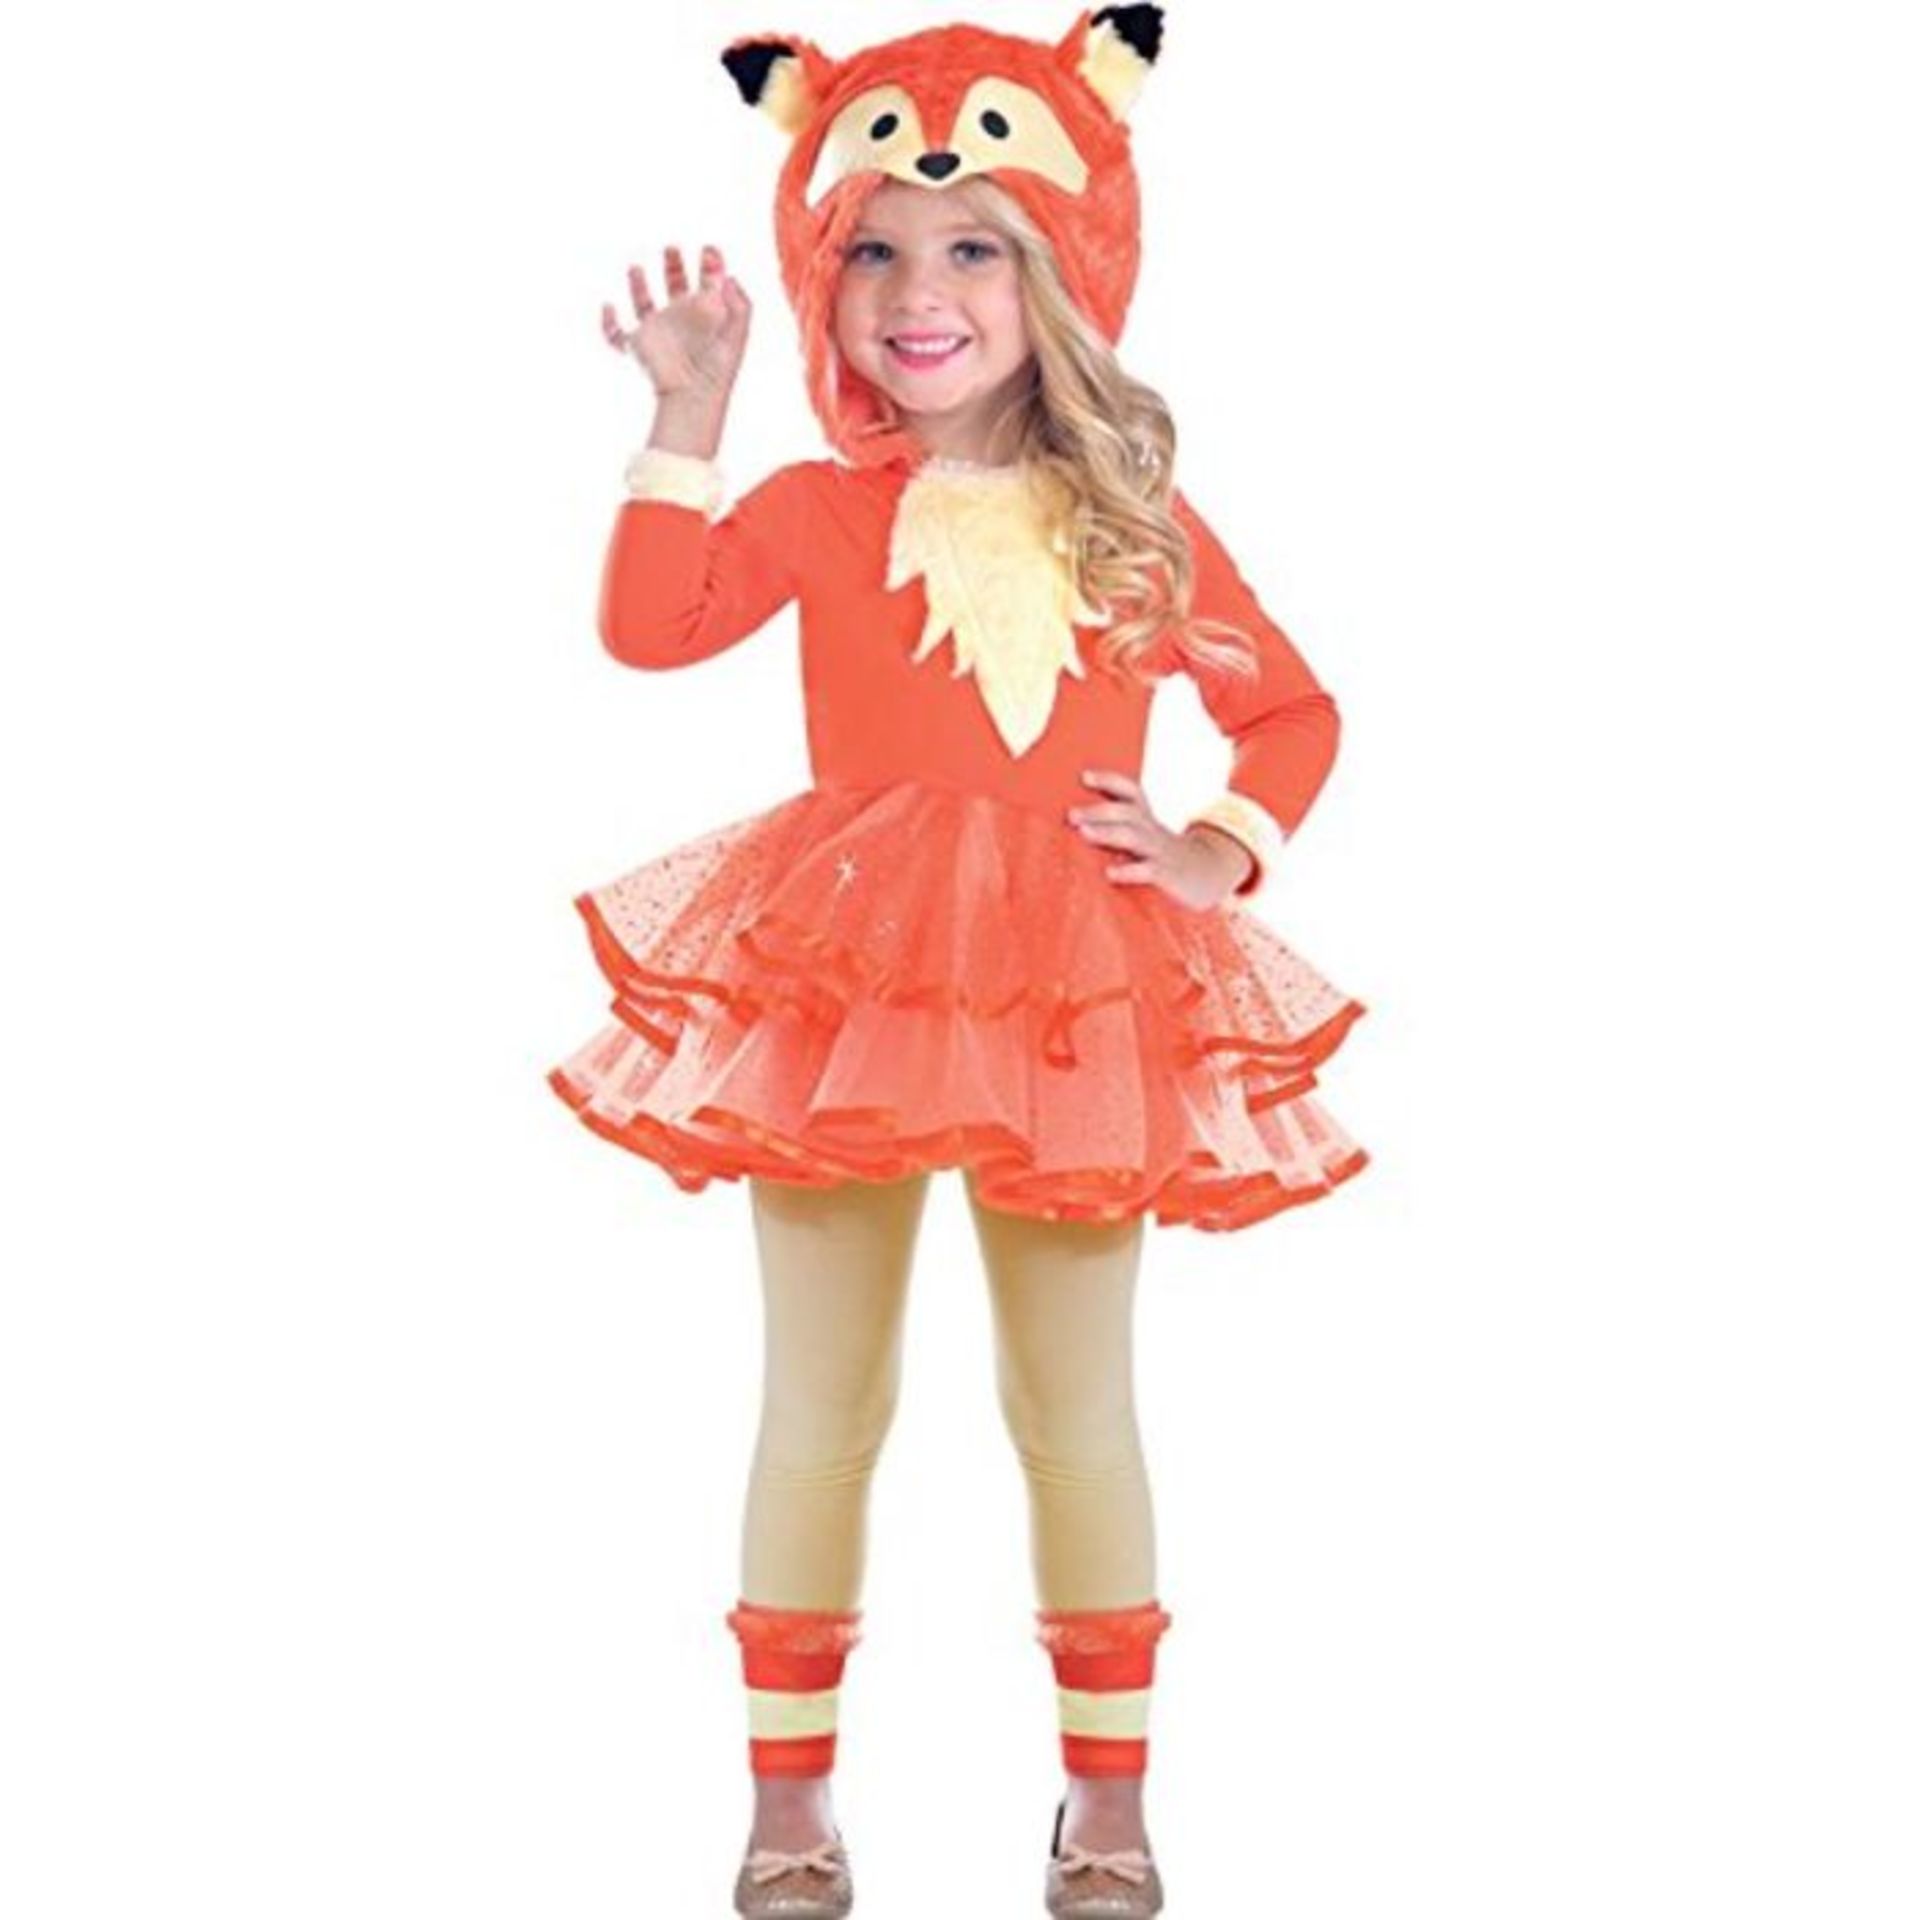 amscan 9903508 Orange Fox Hooded Dress with Leg Warmers - Age 3-4 Years - 1 PC